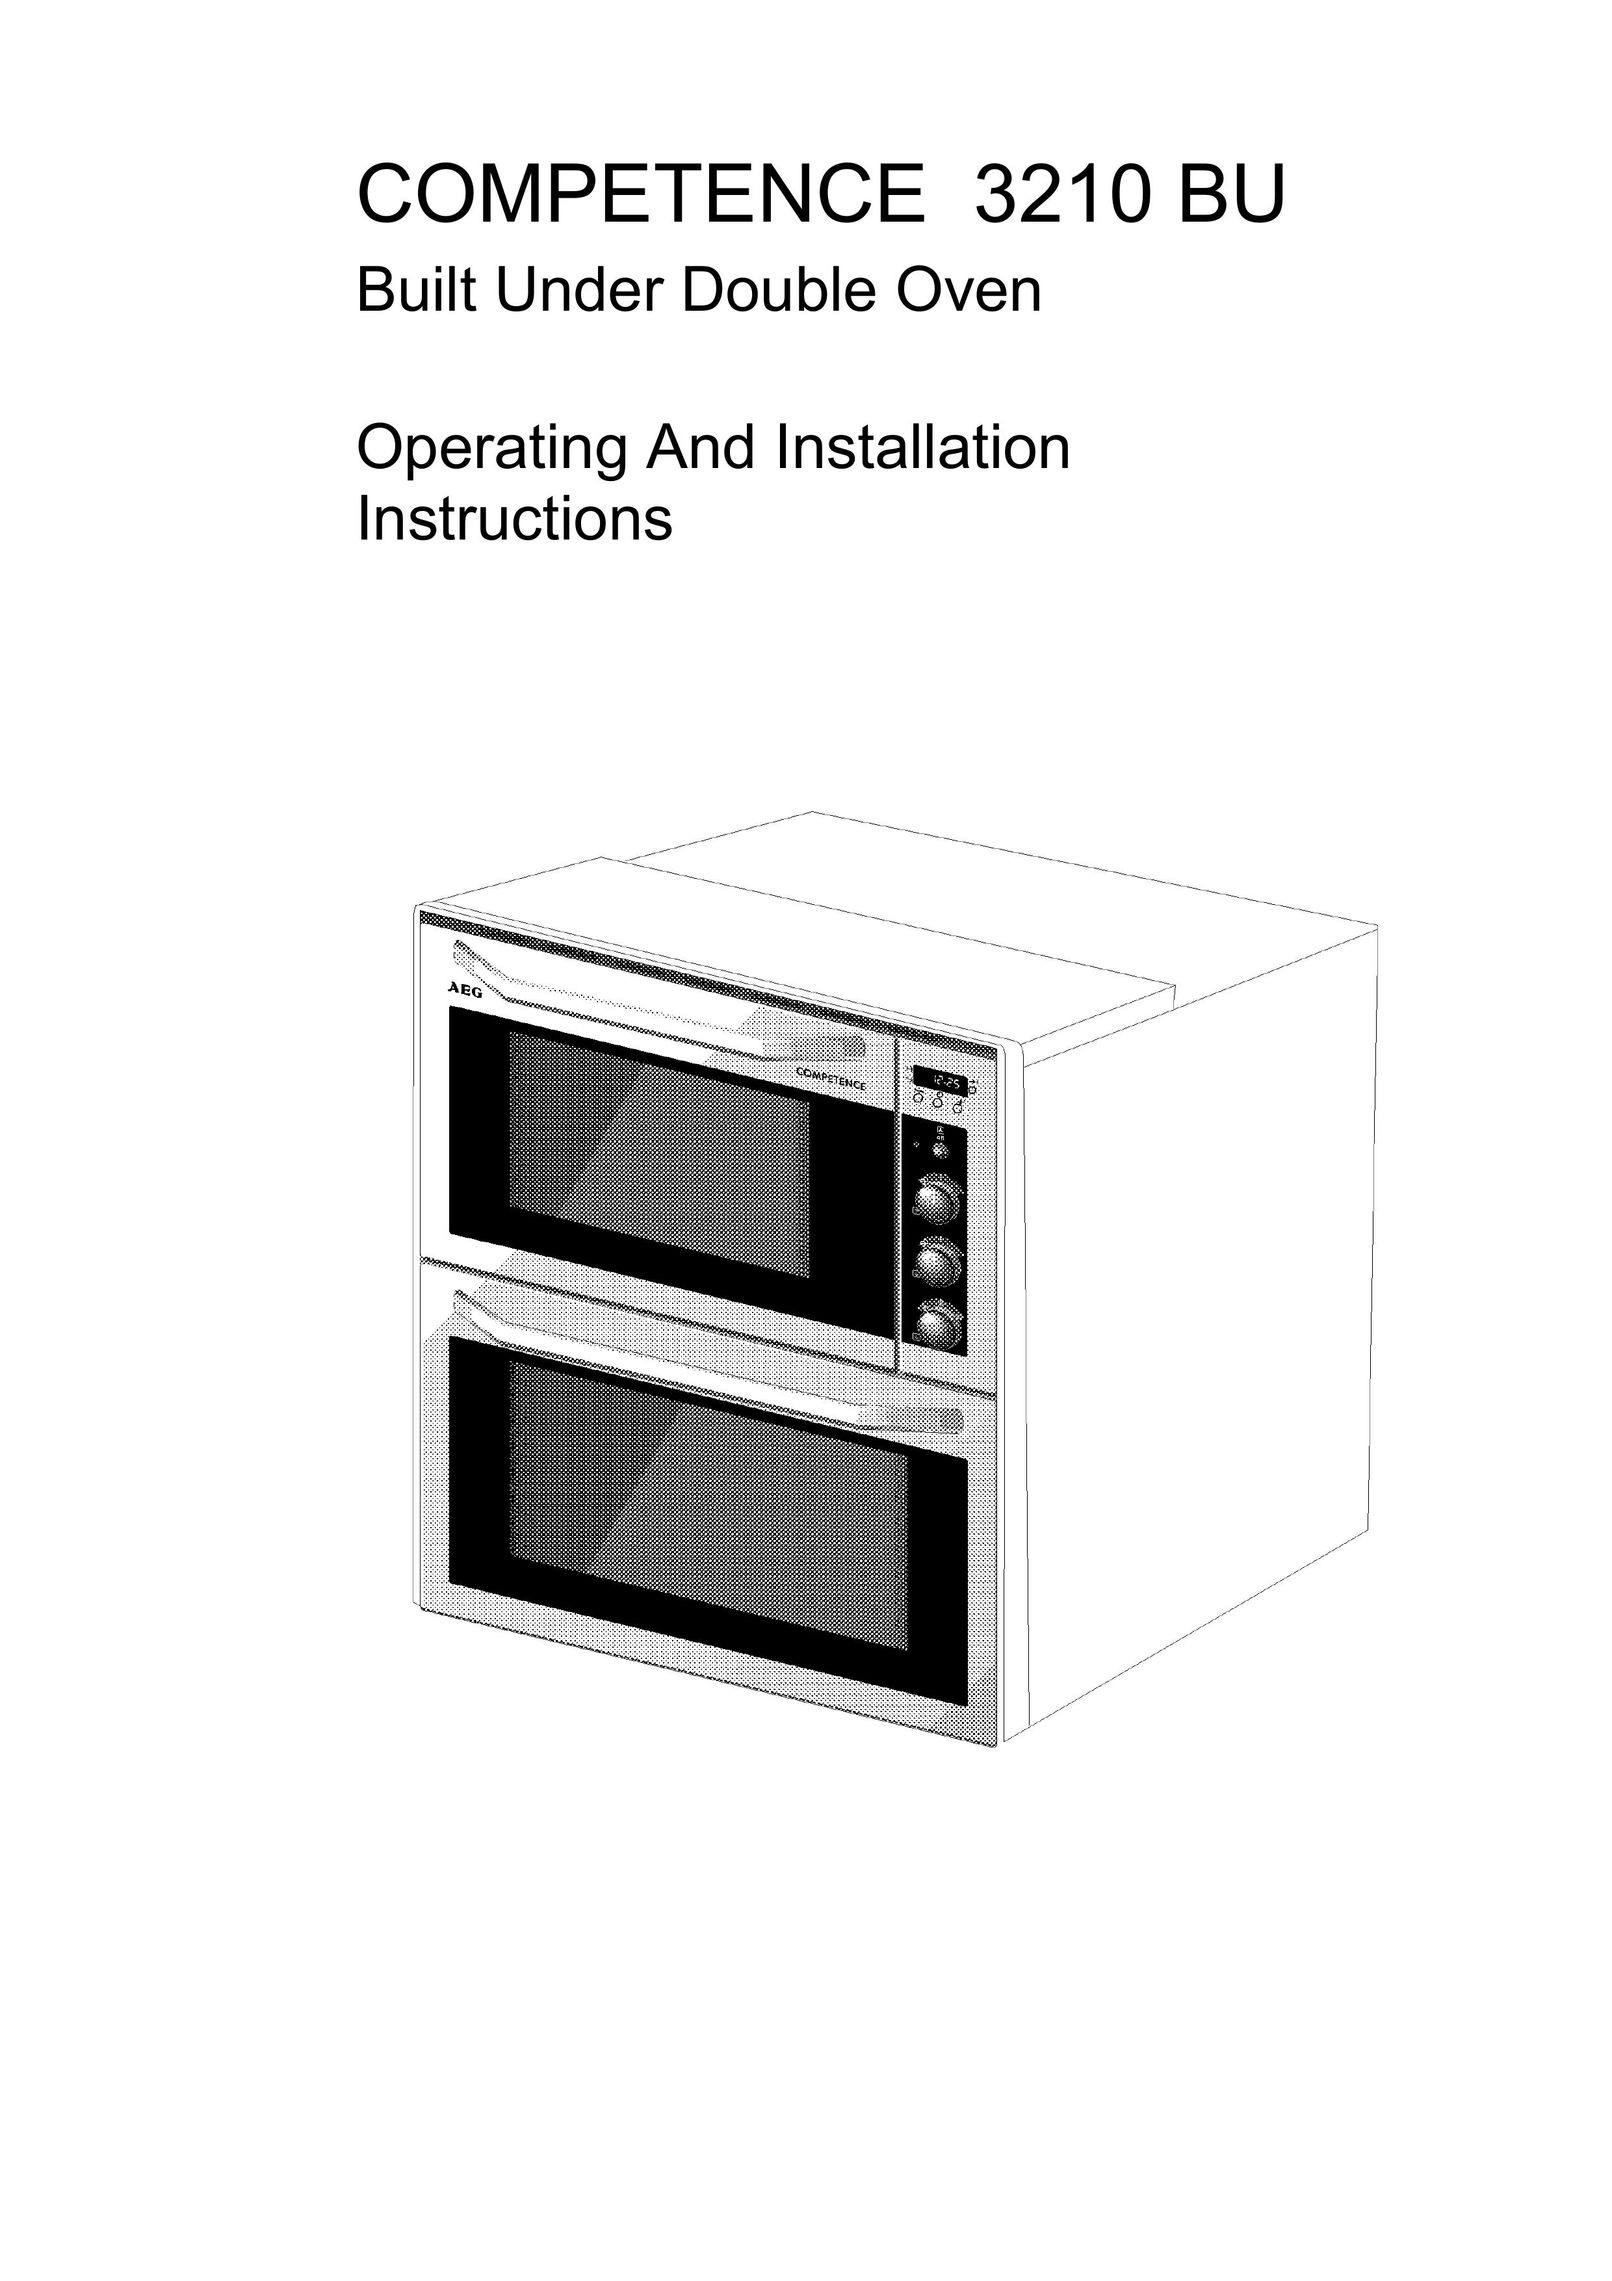 AEG 3210 BU Double Oven User Manual